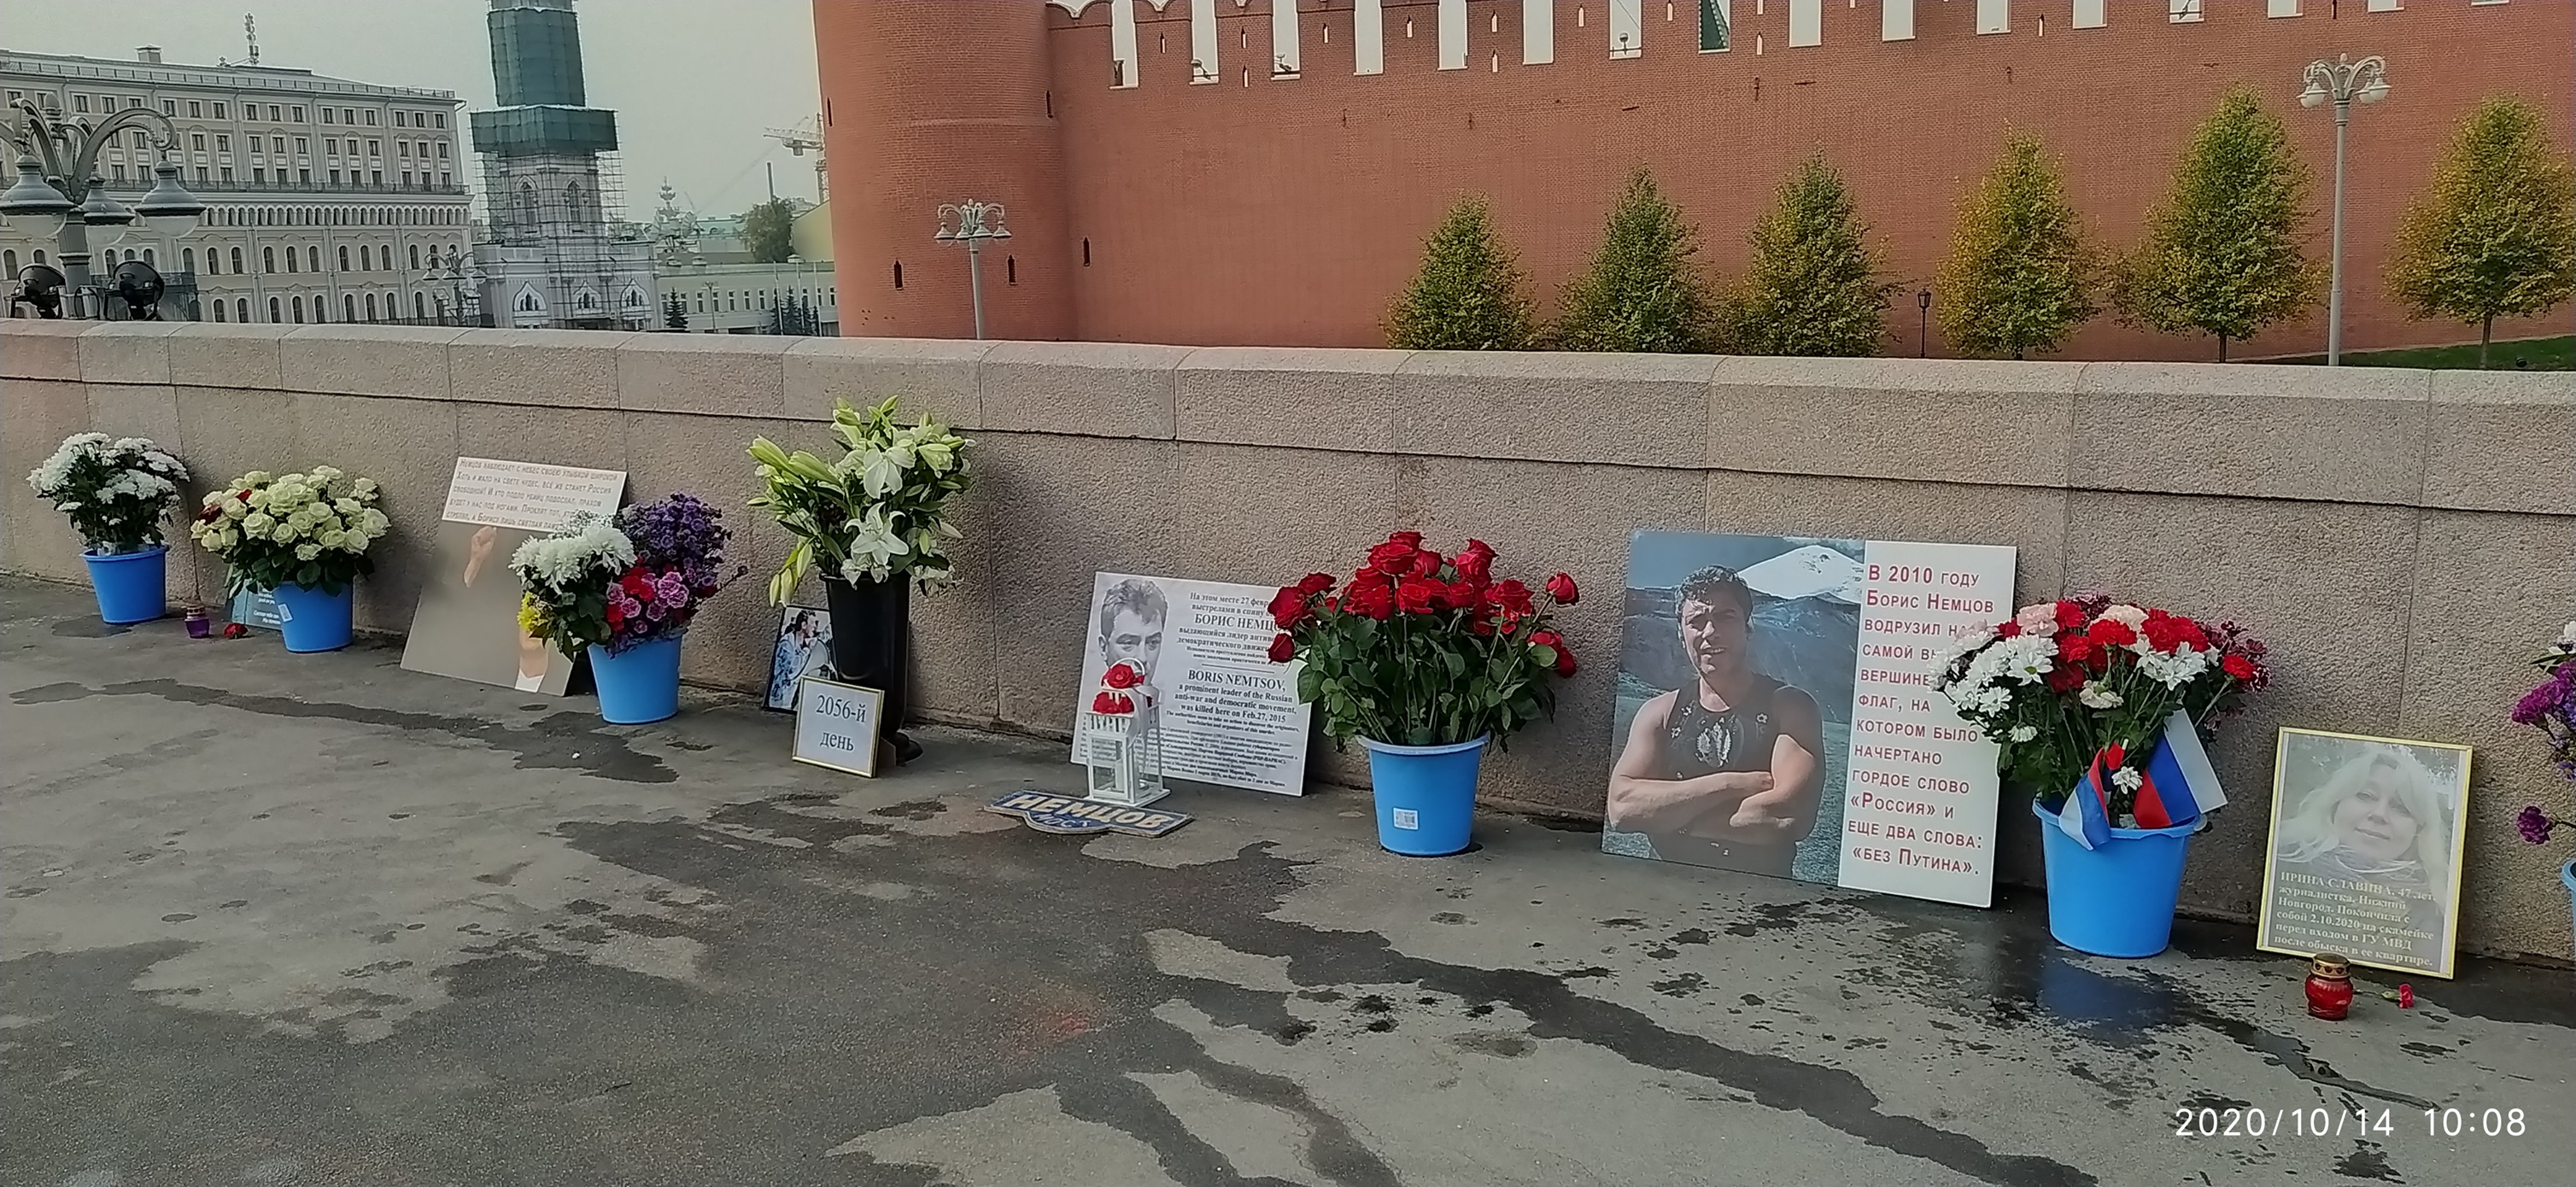 Борис Немцов могила 2020